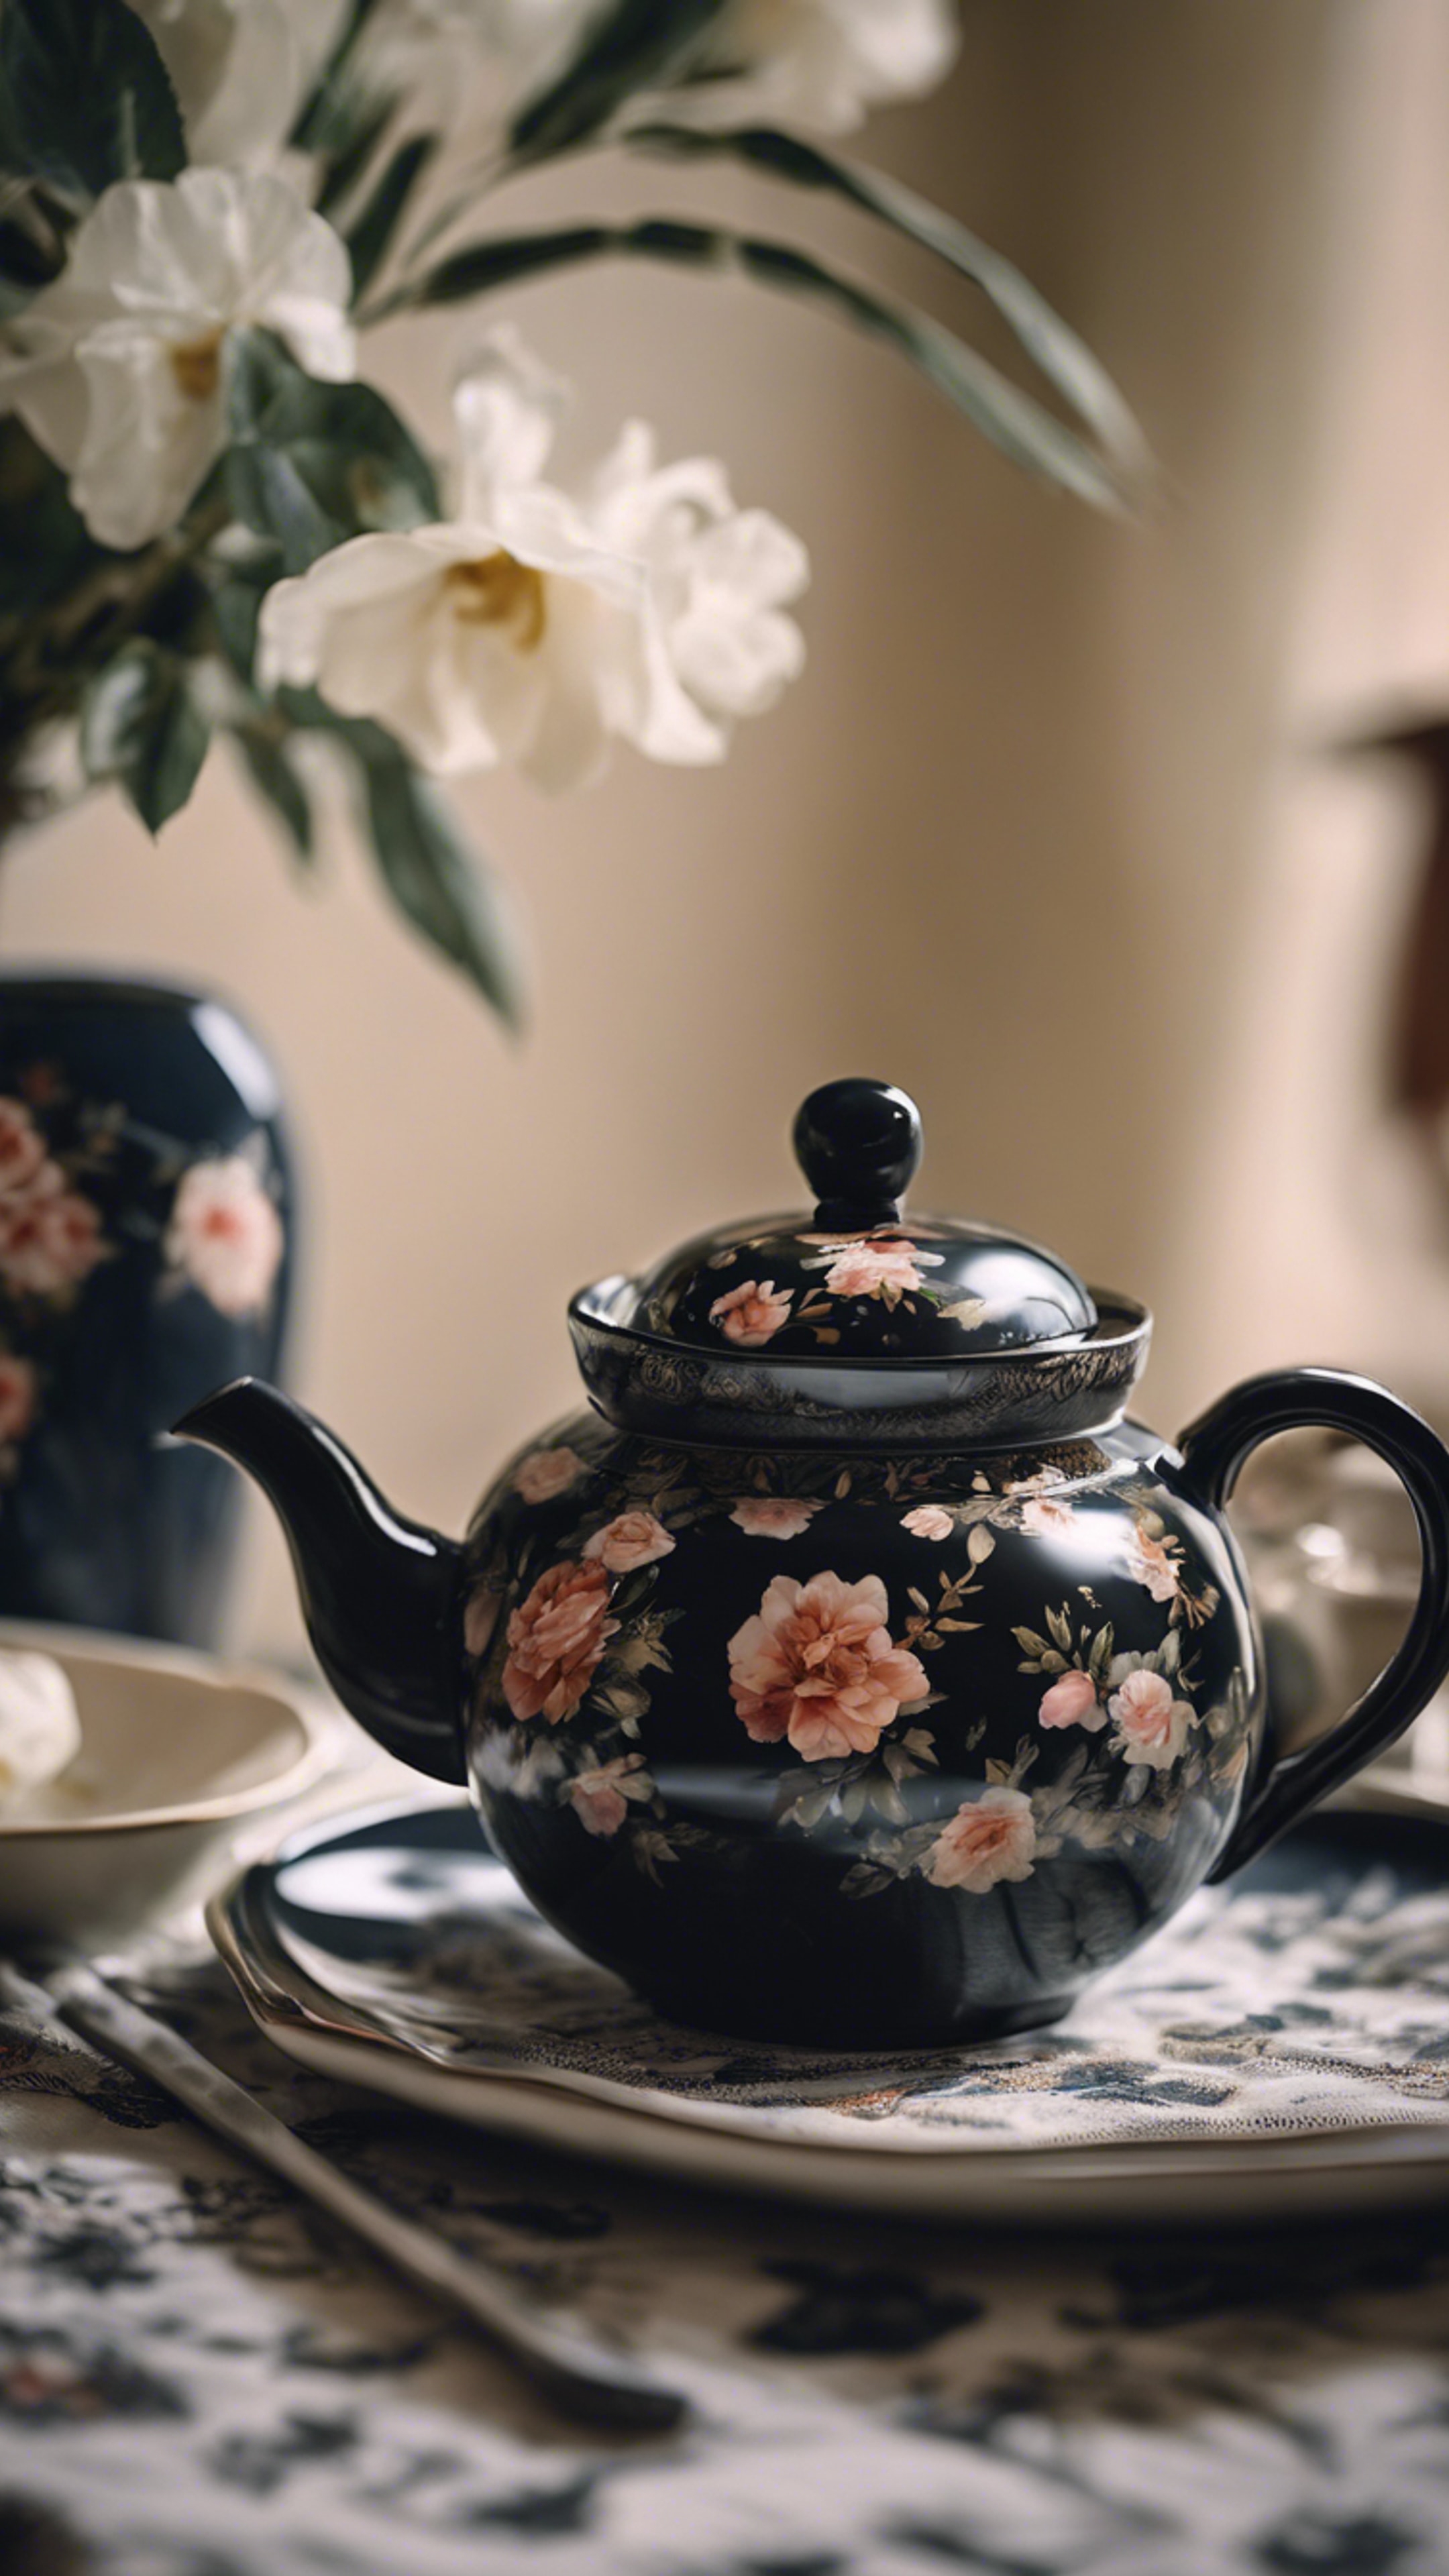 A black floral-patterned china teapot set on a vintage table cloth under soft lighting.壁紙[3c426a4283274dfa90ec]